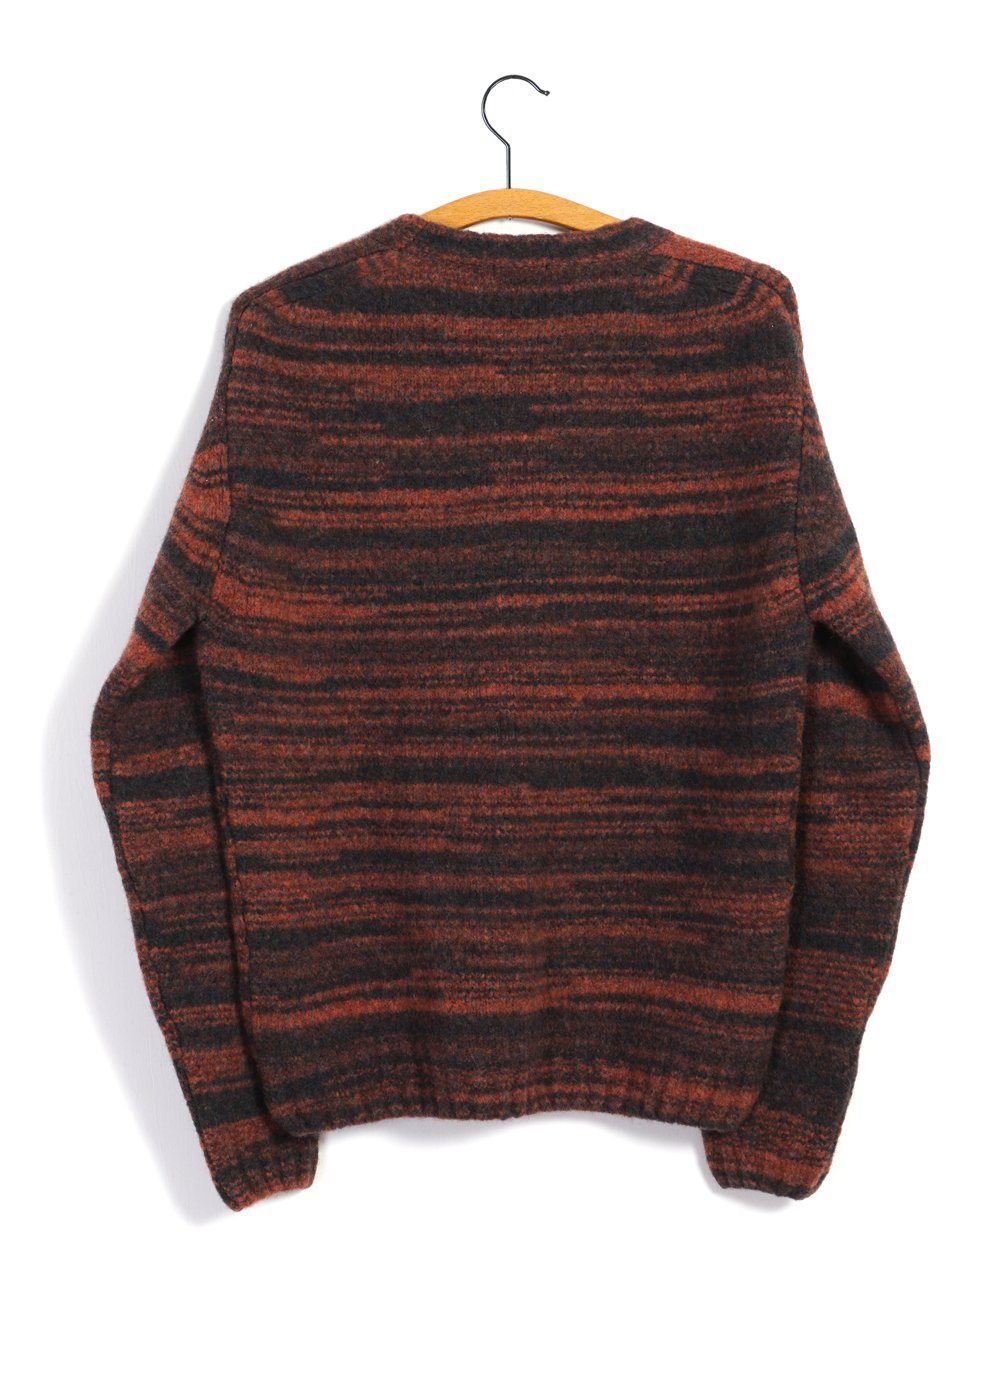 HANSEN GARMENTS - LEONARD | Knitted Crew Neck Sweater | Bonfire - HANSEN Garments